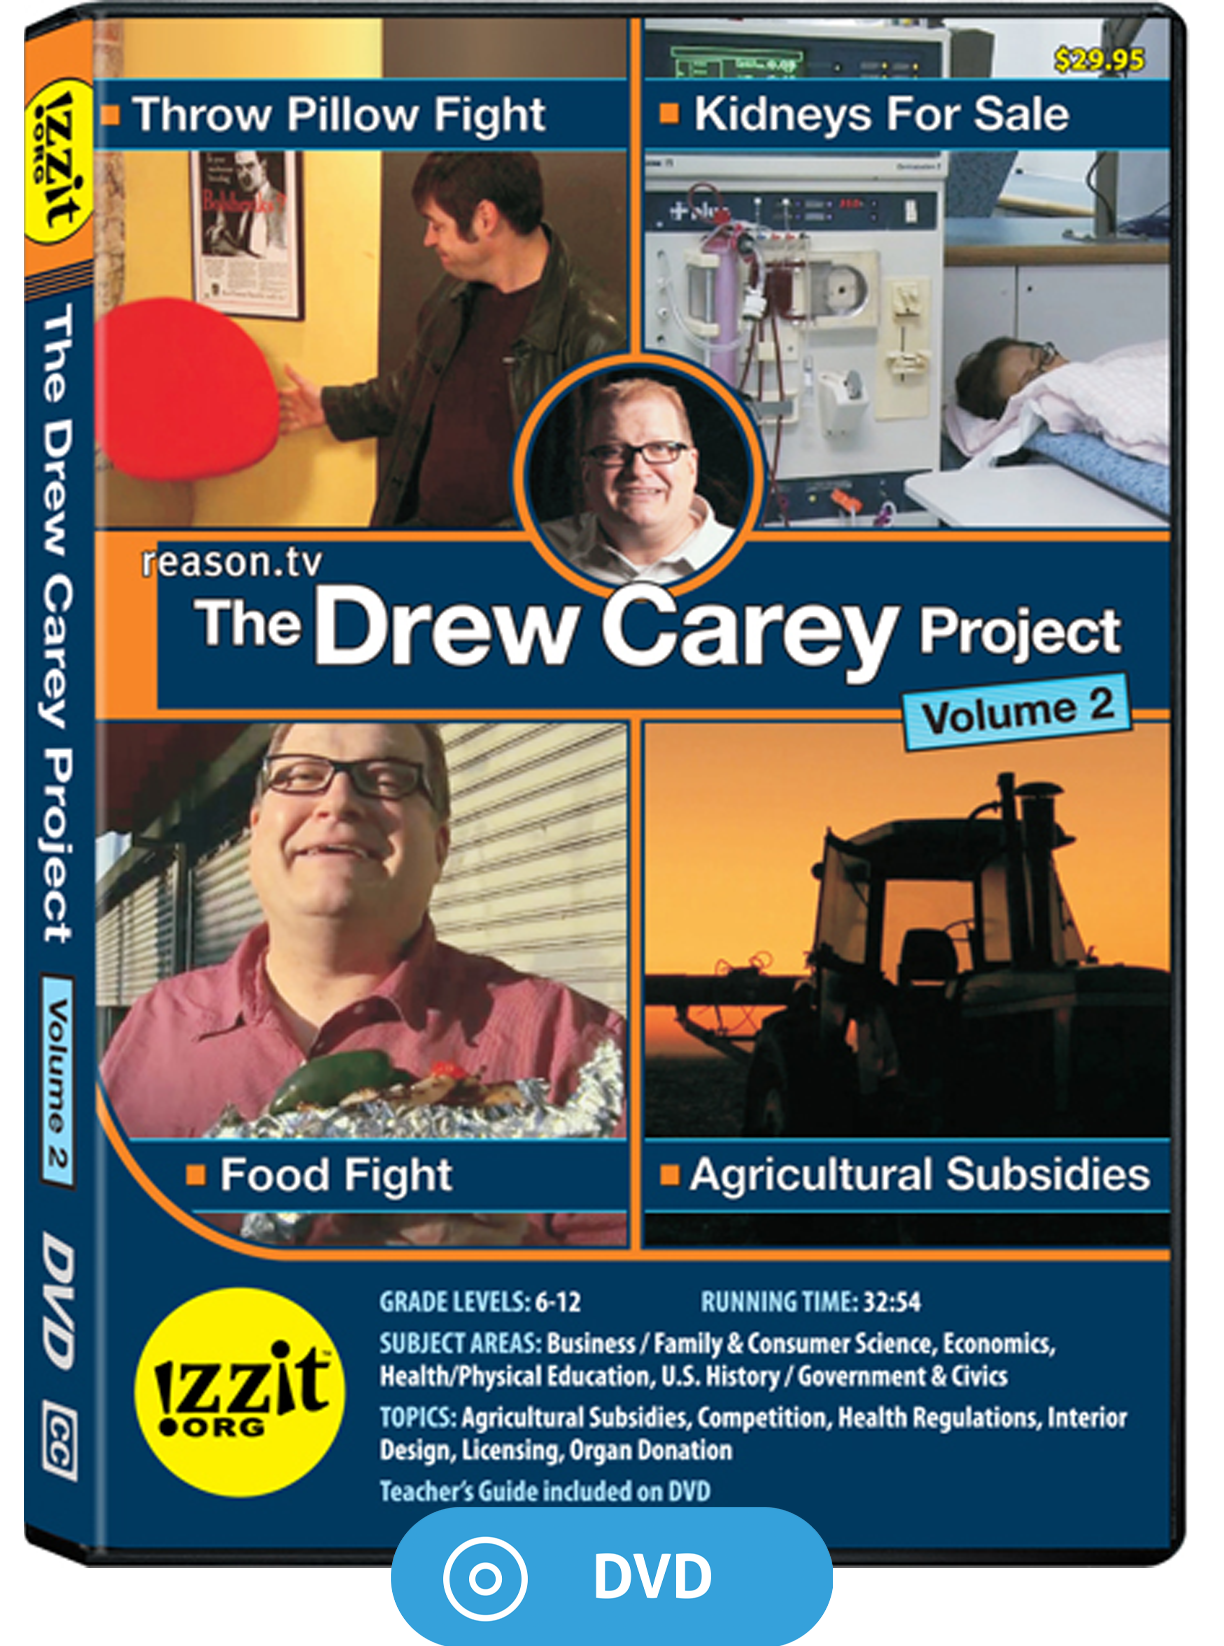 The Drew Carey Project Volume 2 DVD